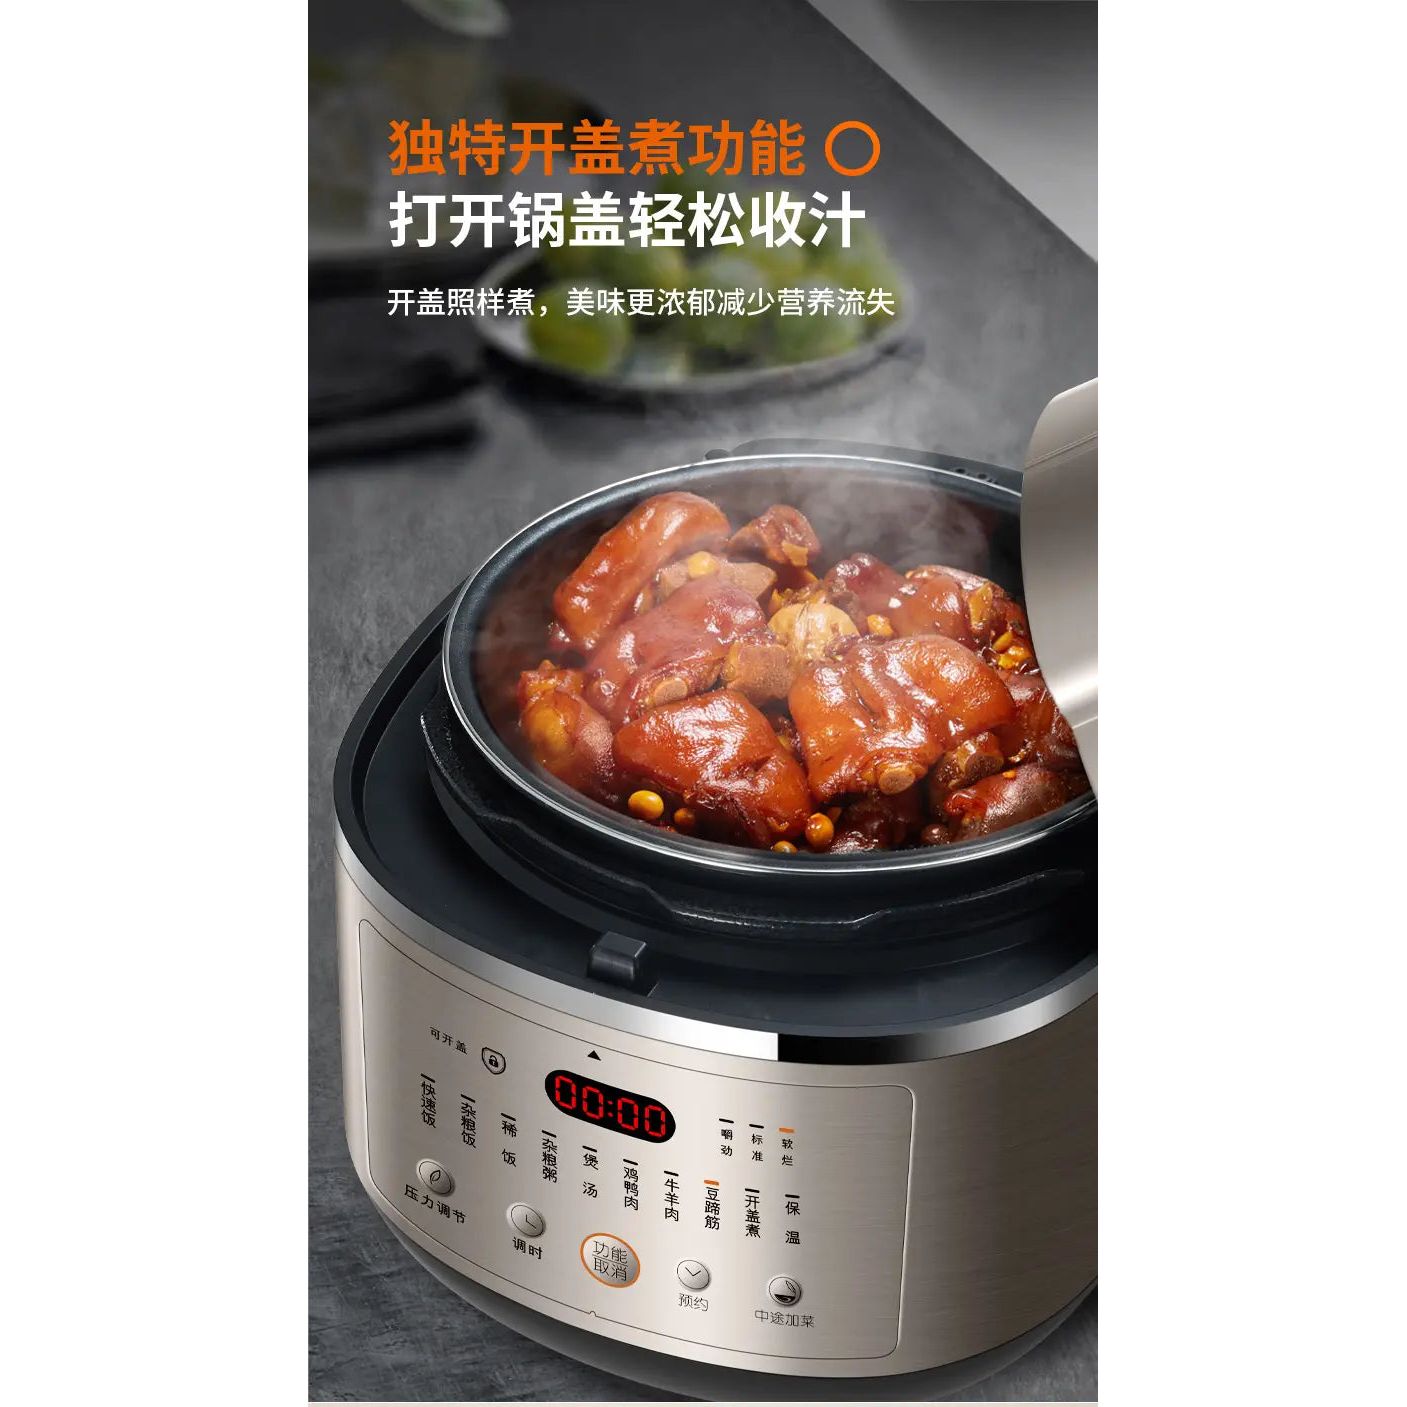 Joyoung/Jiuyang JYY-20M3 mini electric pressure cooker high